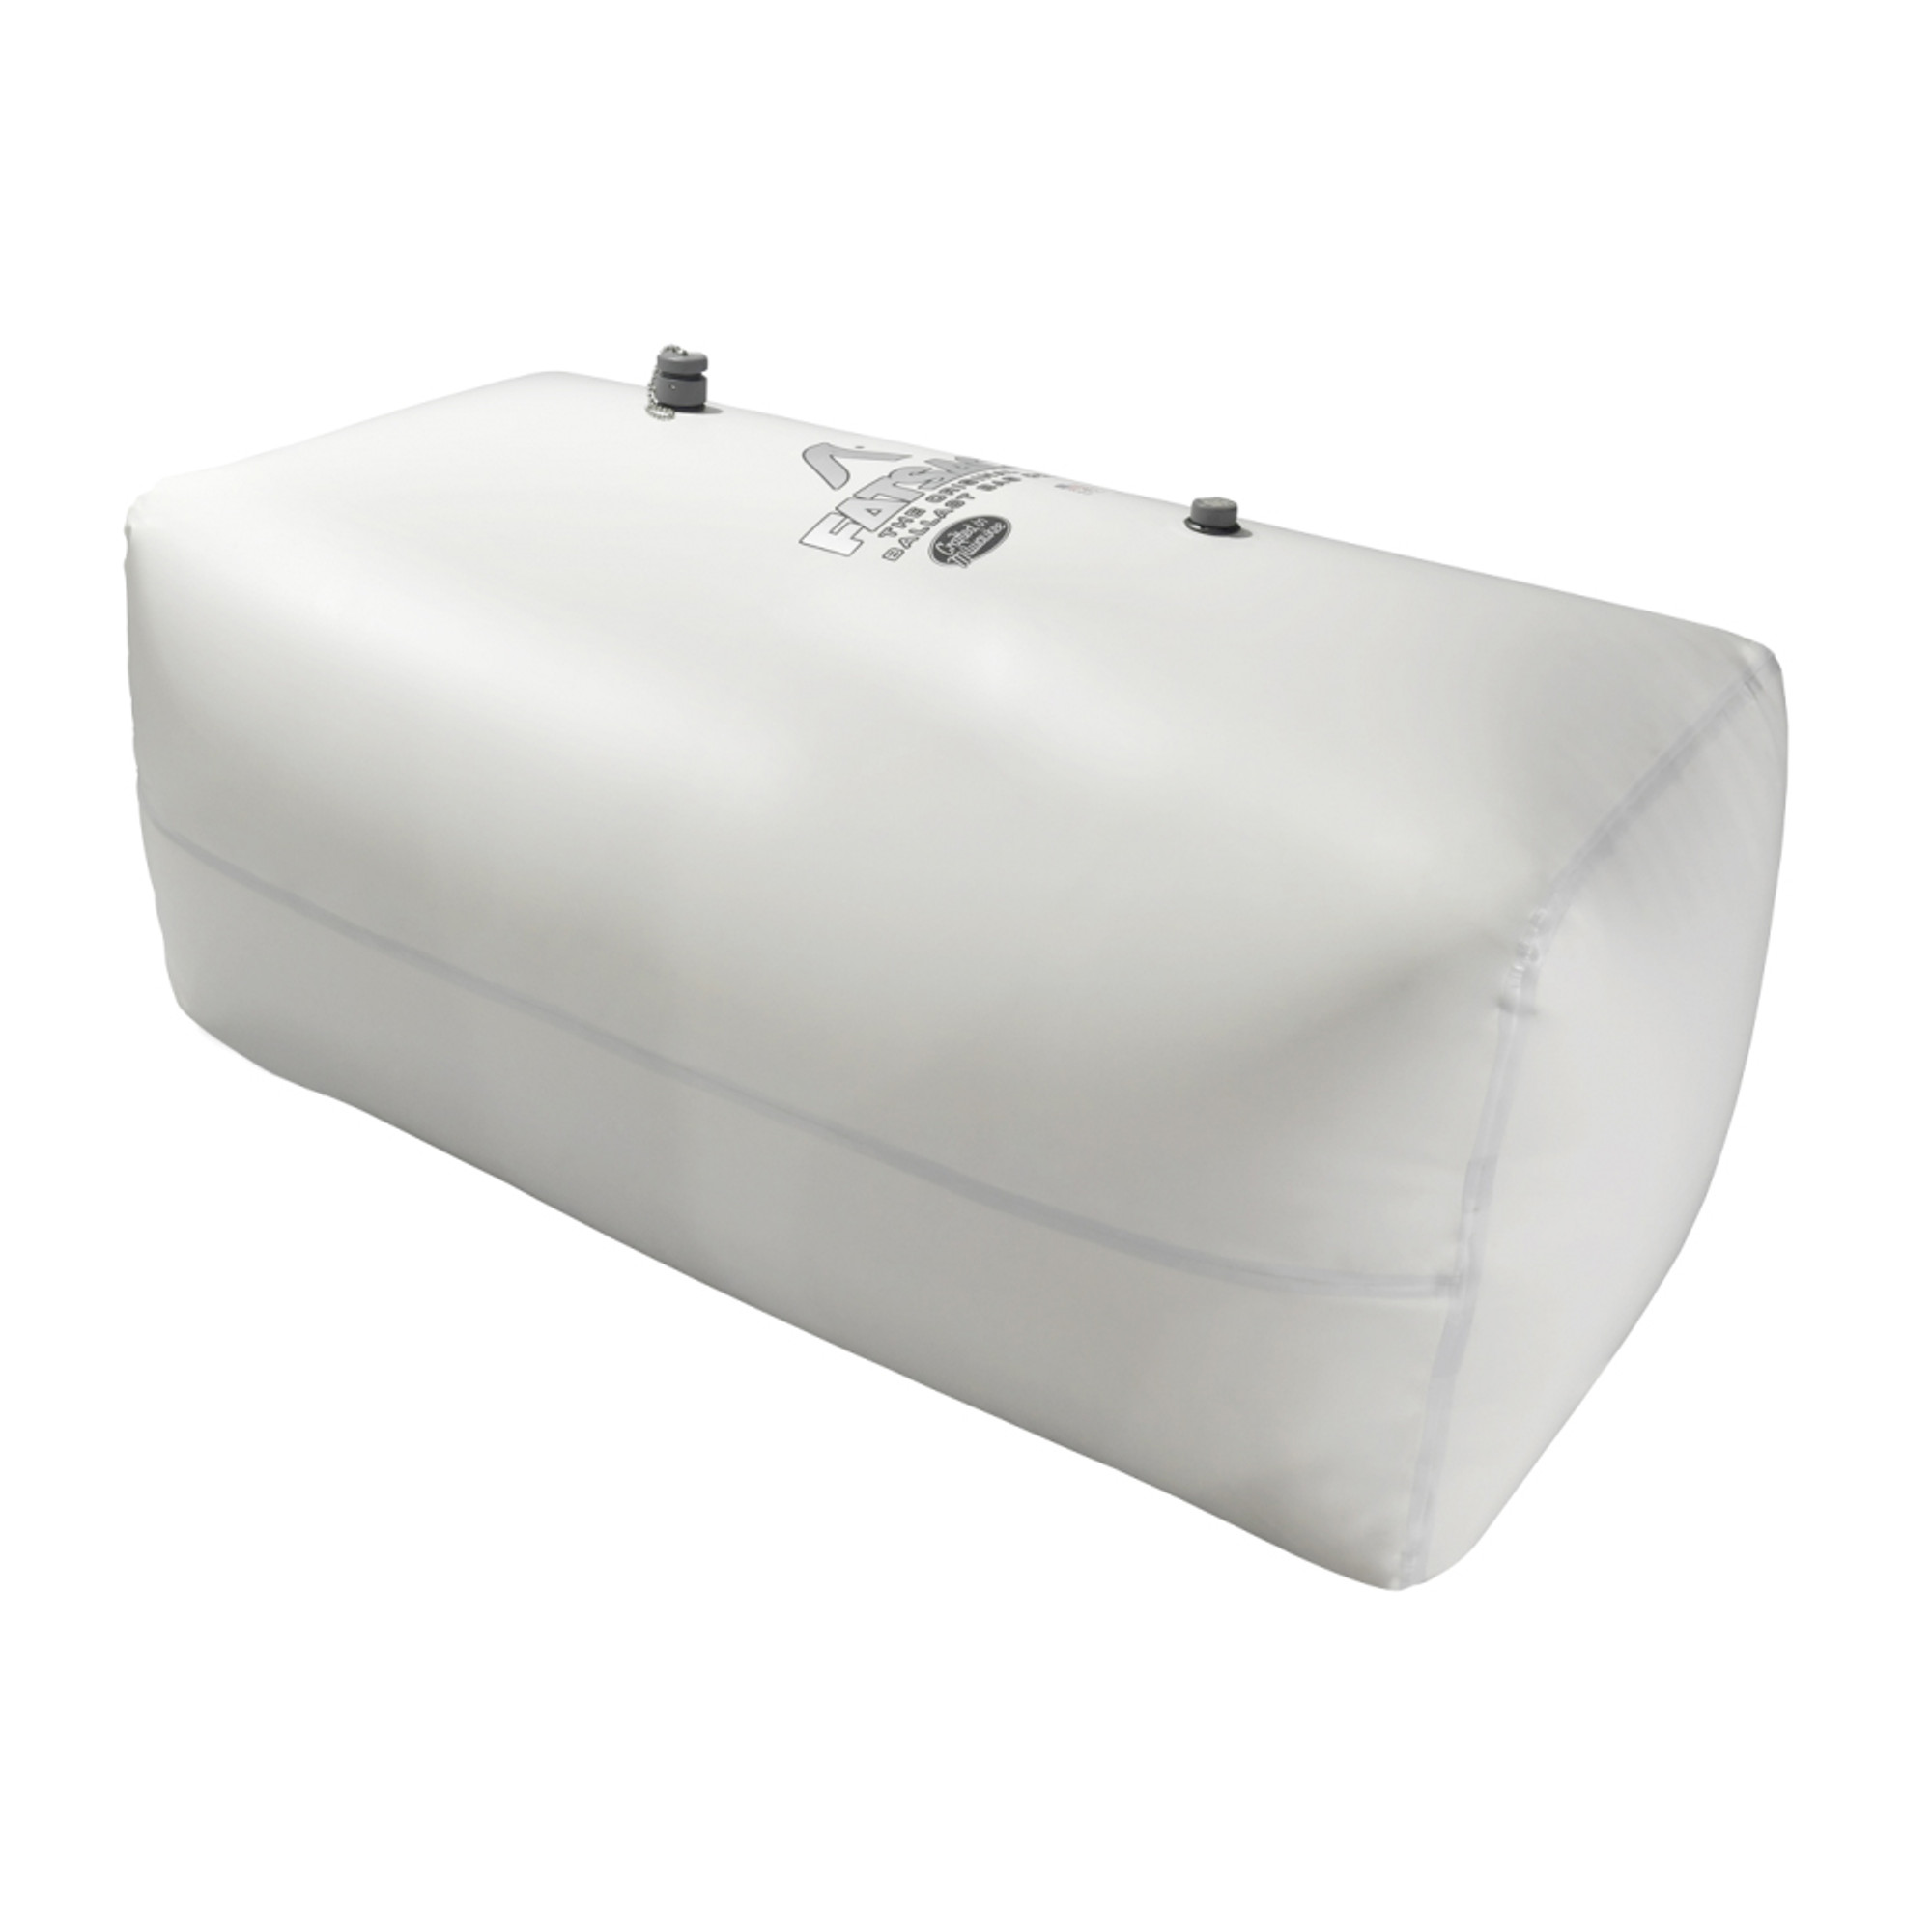 FATSAC Jumbo V-Drive Wakesurf Fat Sac Ballast Bag - 1100lbs - White